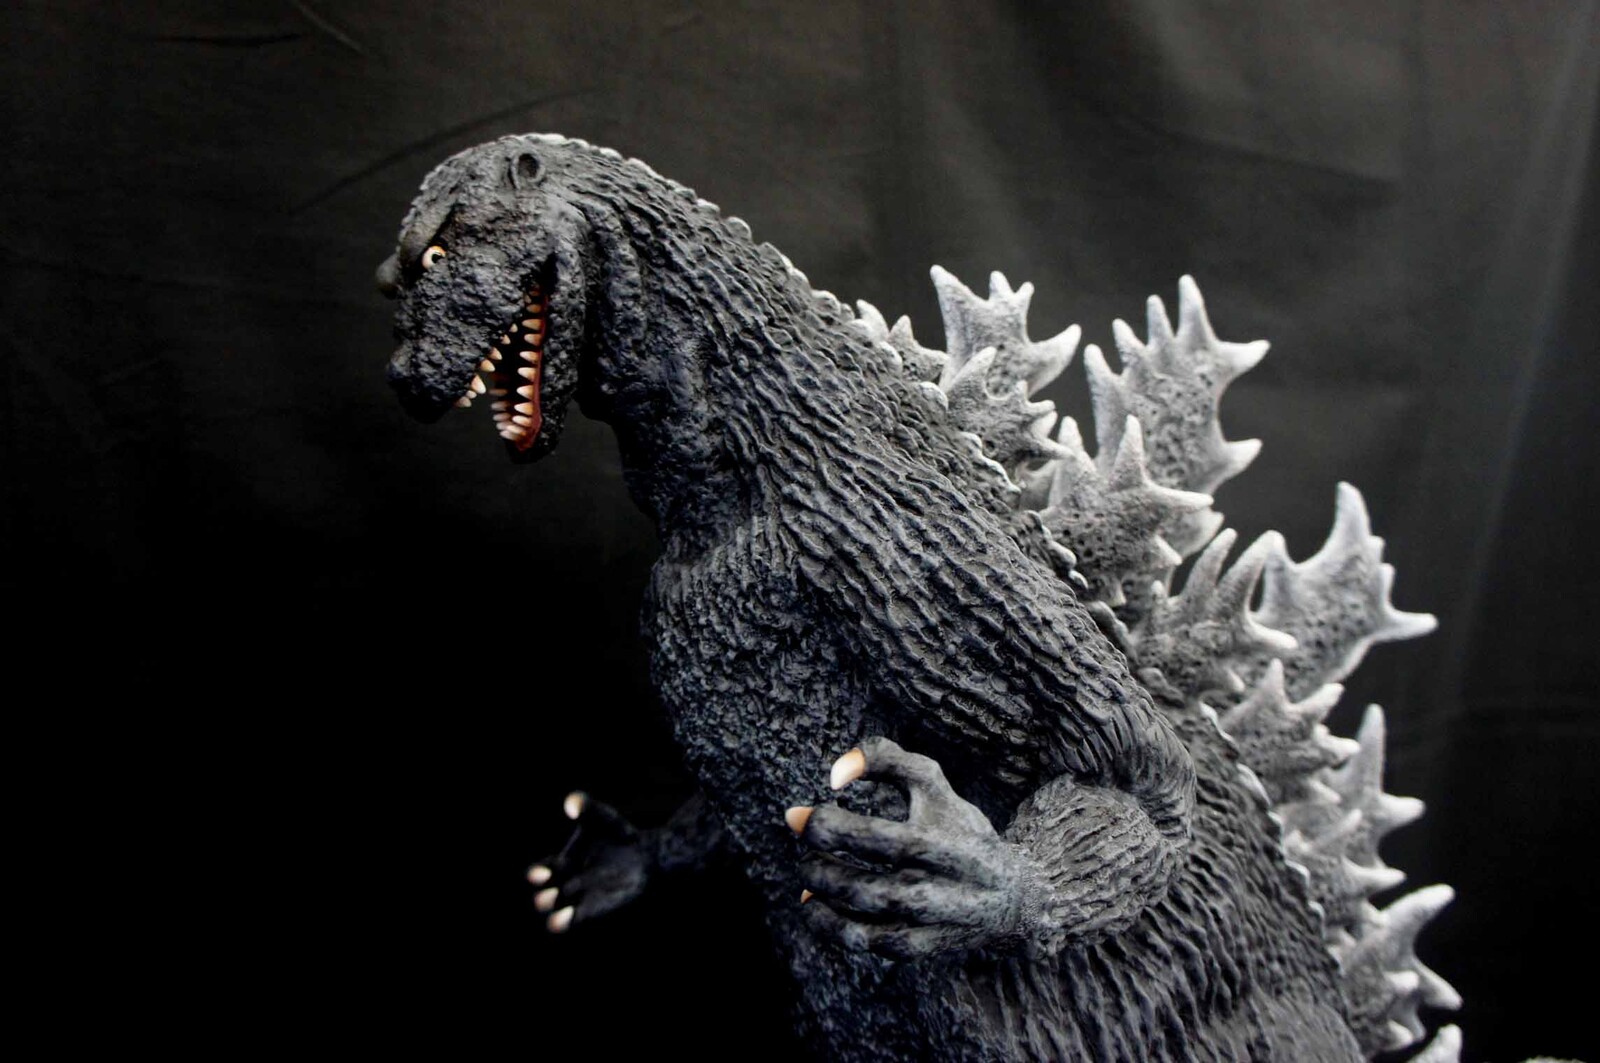 1954 Godzilla 60 cm Art Statue 
初代 ゴジラ
https://www.solidart.club/